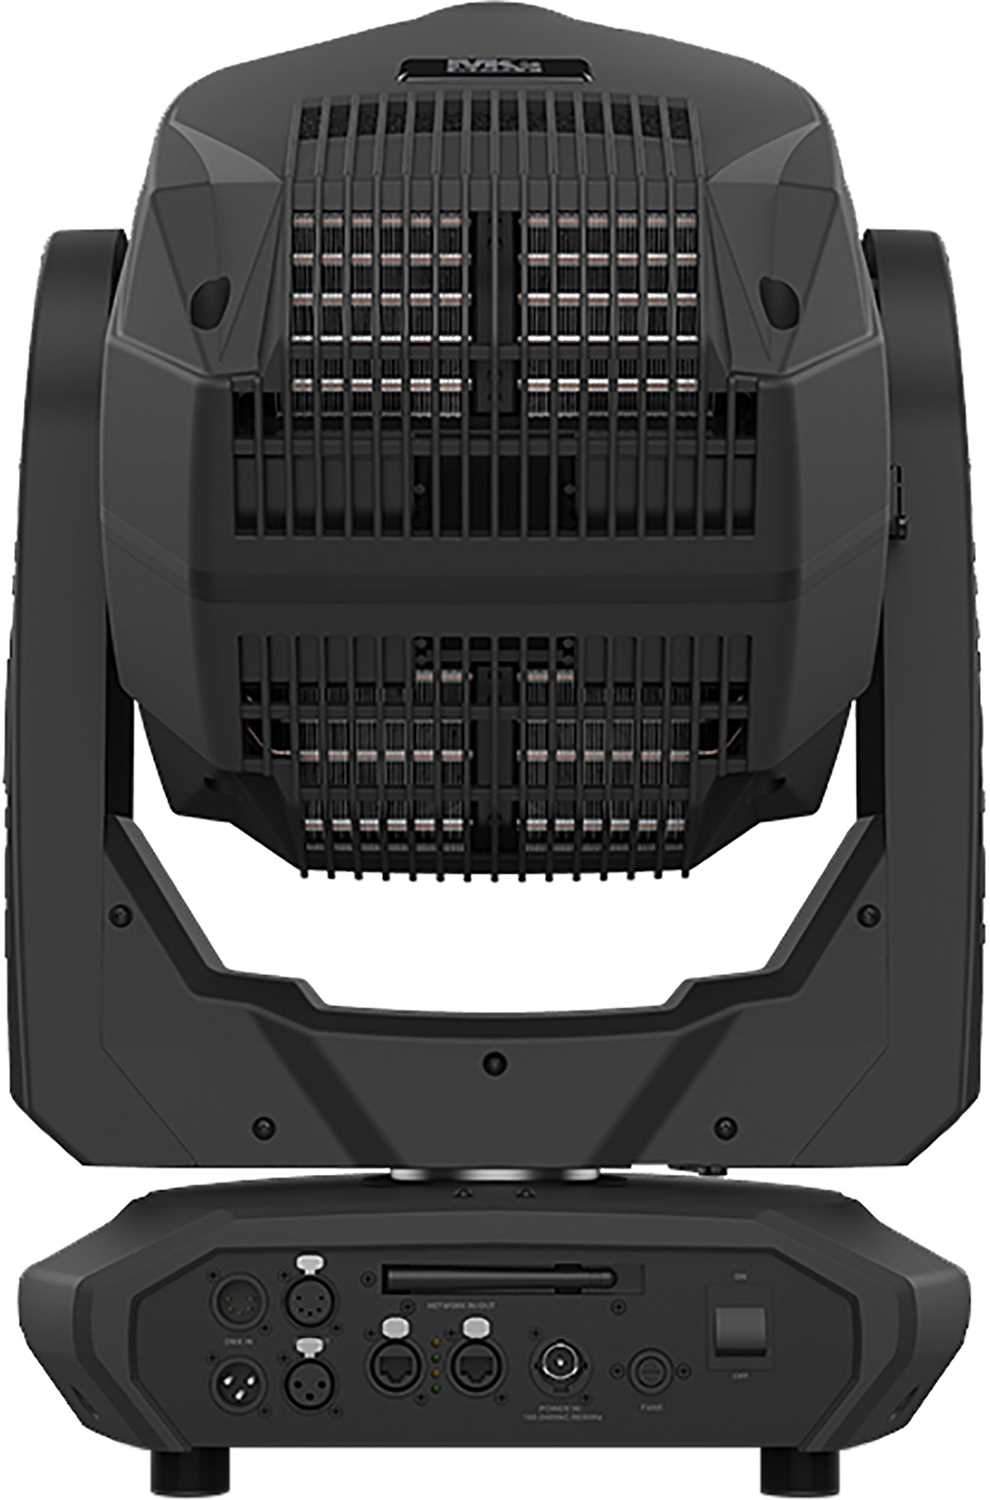 Chauvet Maverick MK3 Spot 820W CW LED Moving Head - PSSL ProSound and Stage Lighting